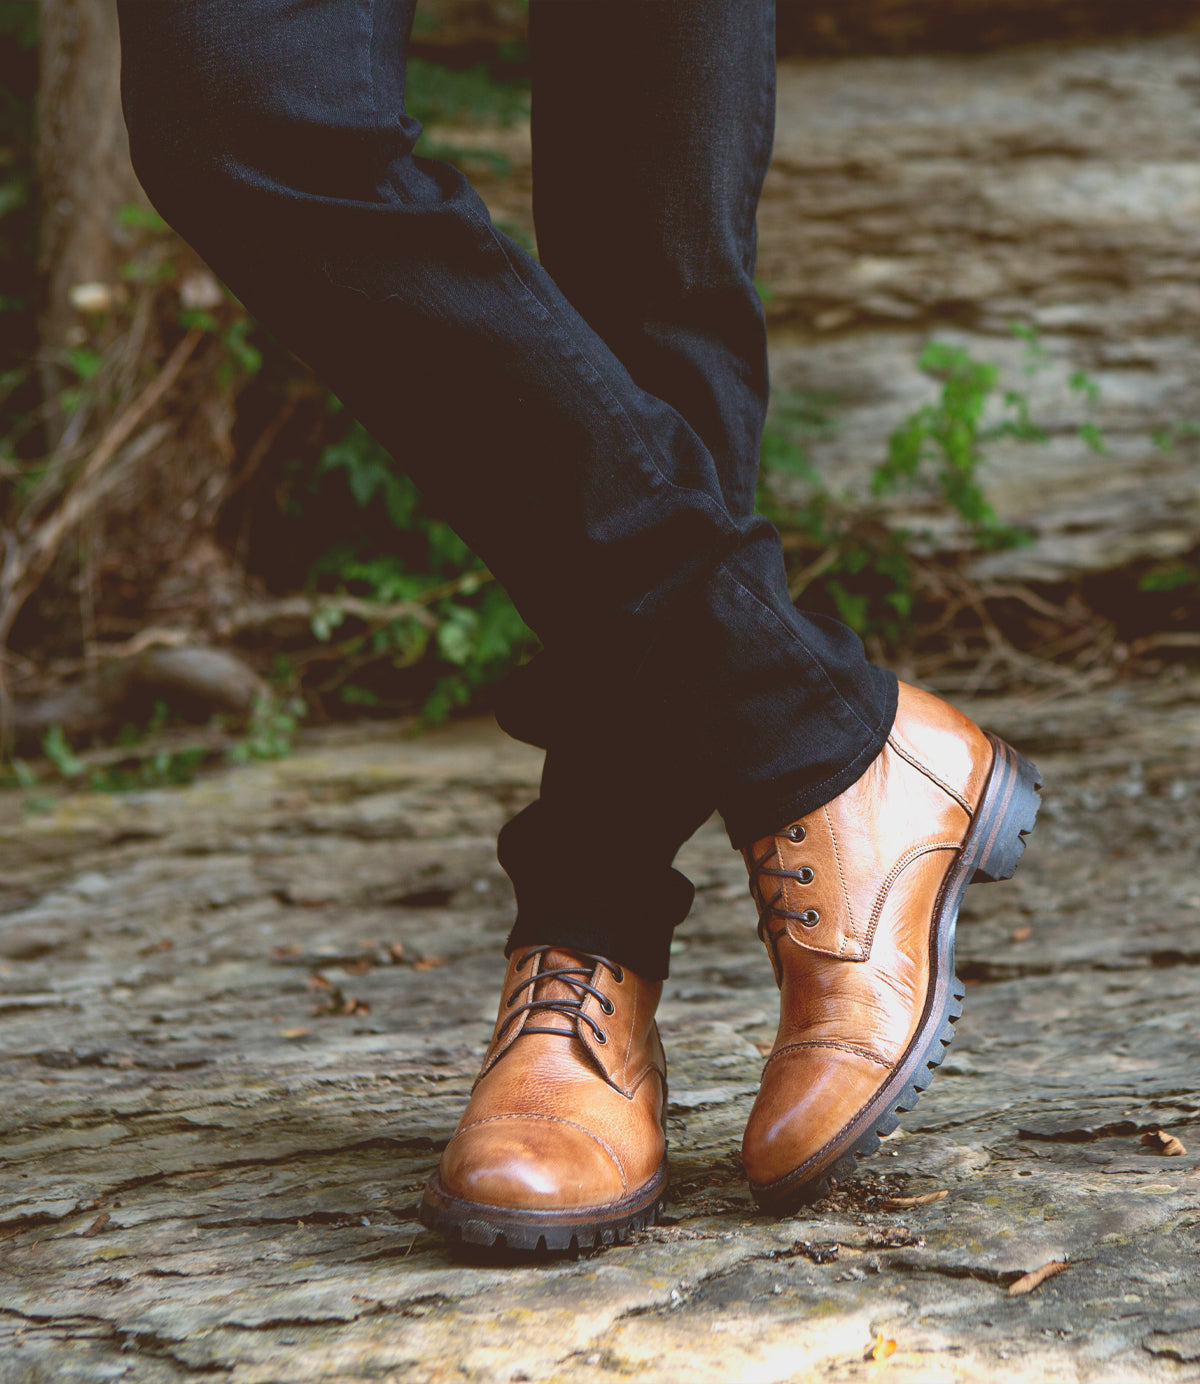 Close-up of a person's legs walking, wearing Bed Stu Protege Trek Teak Black Rustic Rust BFS Boots on a cobblestone path.